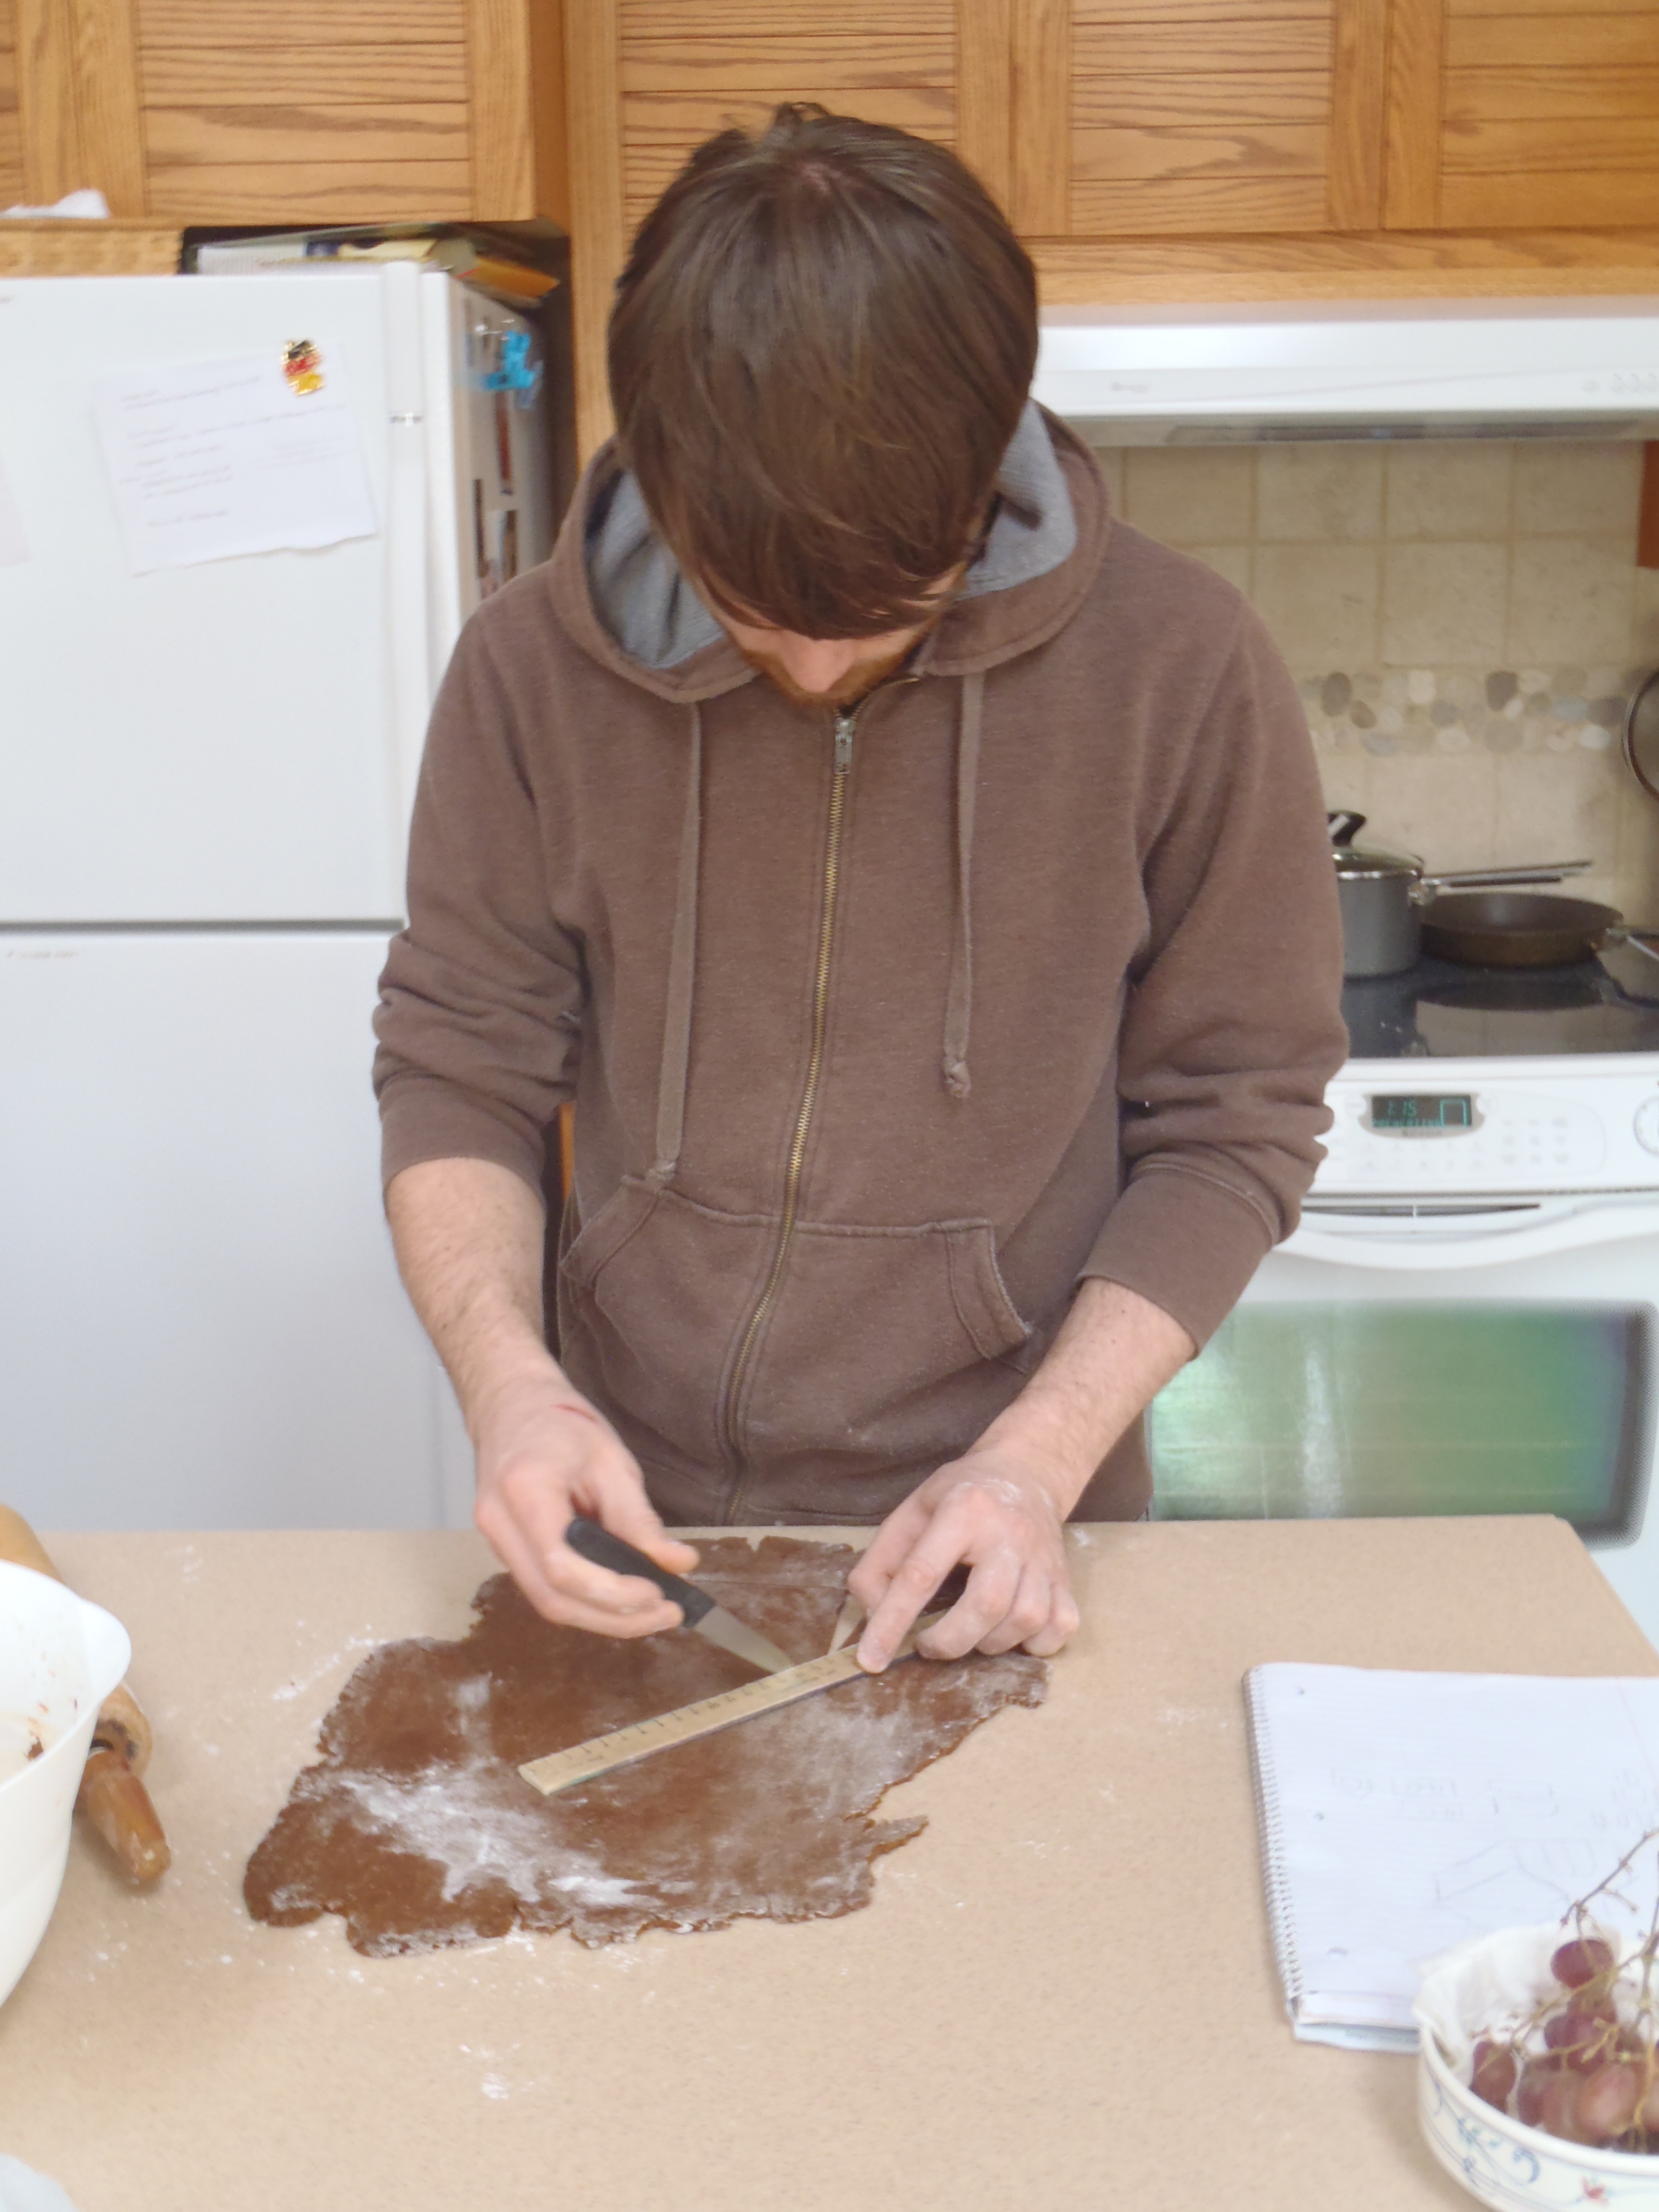 Cutting the raw dough